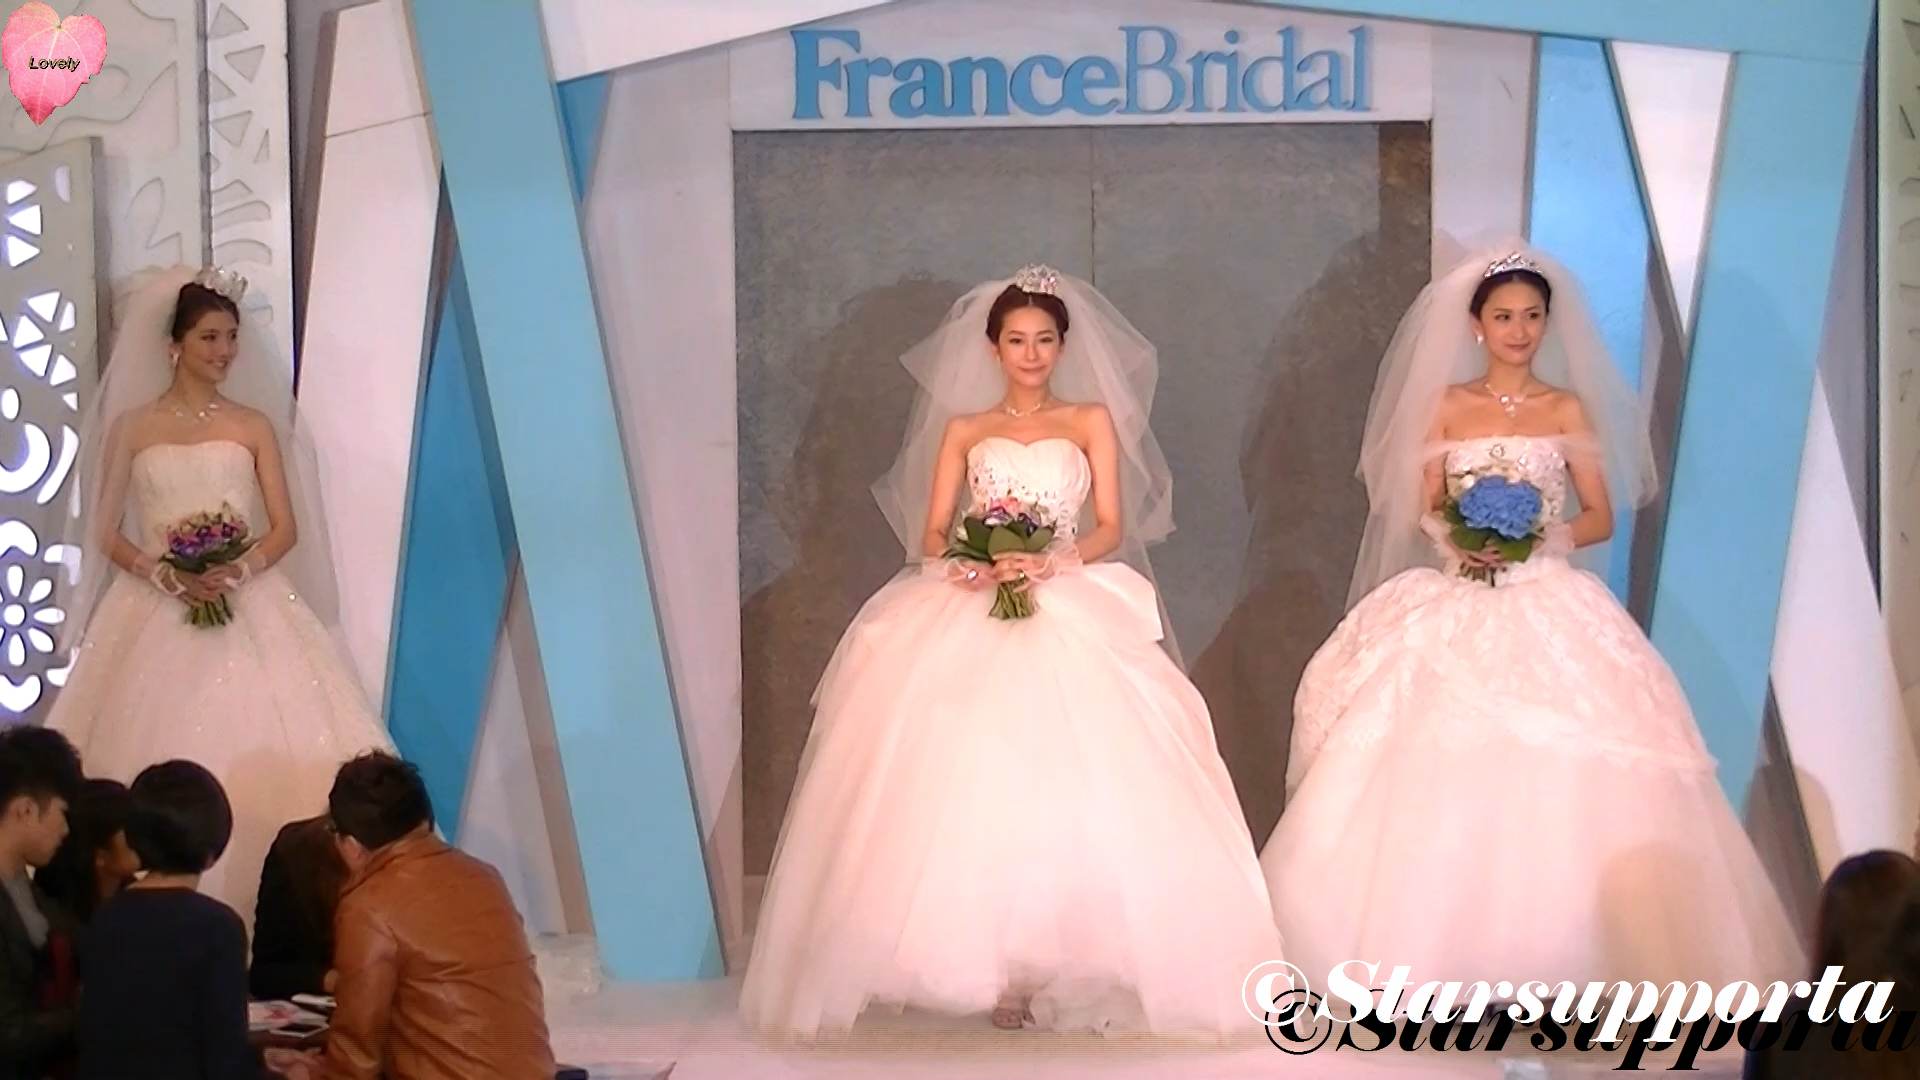 20120311 Hong Kong Wedding & Overseas Wedding Expo - France Bridal @ 香港會議展覽中心 HKCEC (video)